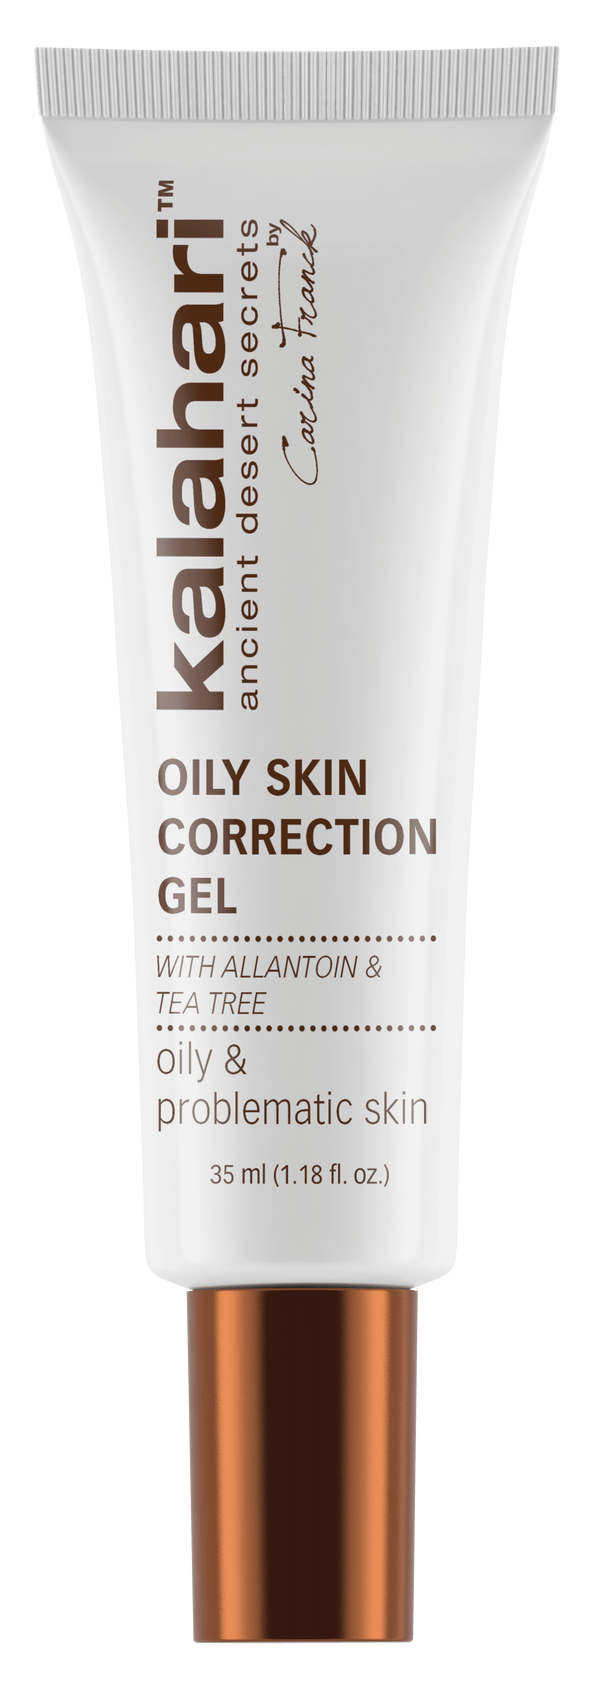 Oily skin correction gel